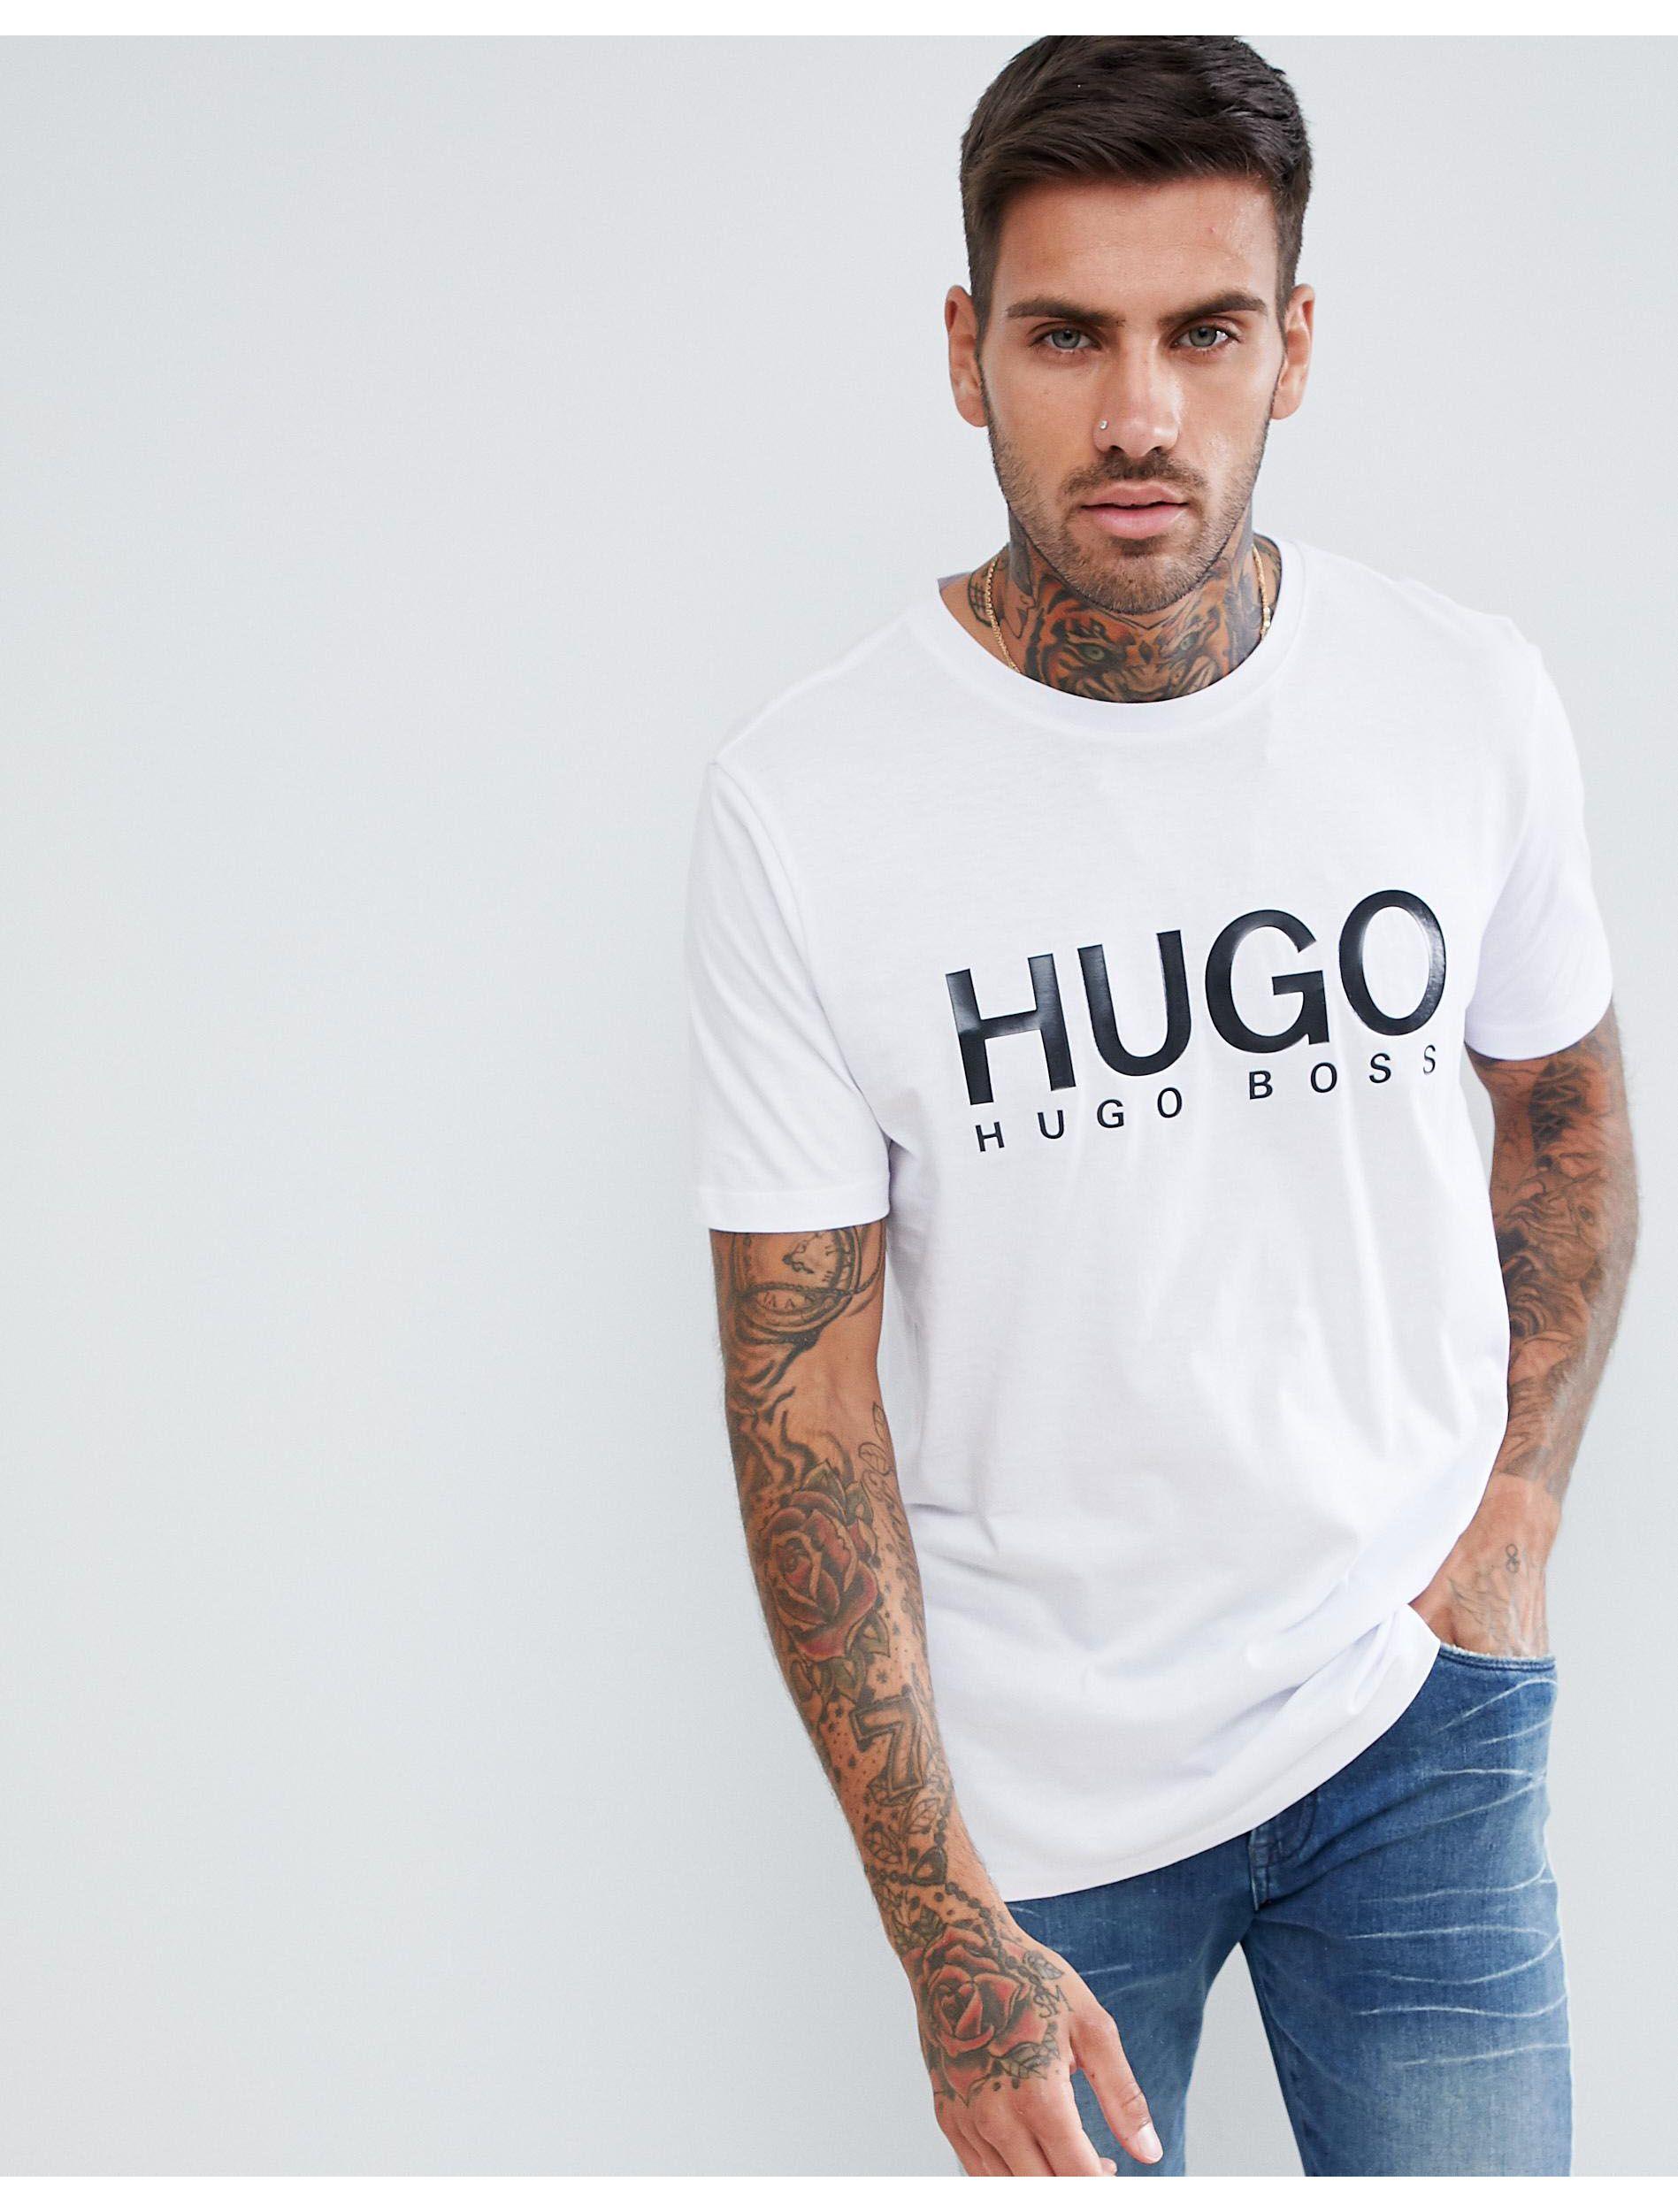 Problems hugo. Футболка Hugo Boss 2021. Футболка Хуго босс с принтом. Hugo футболка мужская. Hugo футболка с принтом.